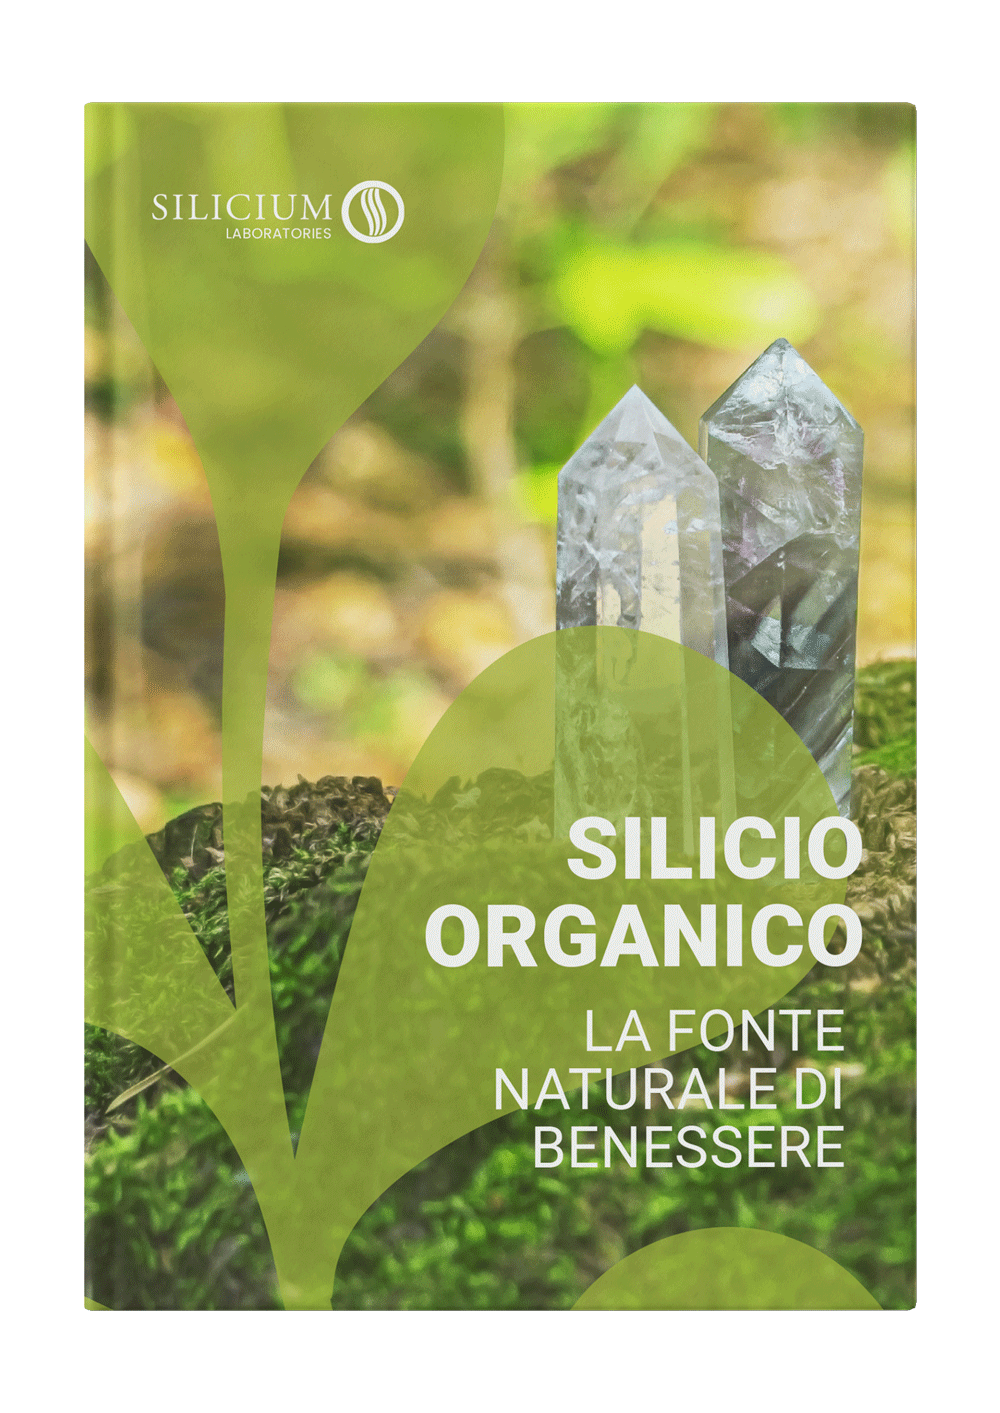 SIL-Silicio-organico-Portada-3D-IT